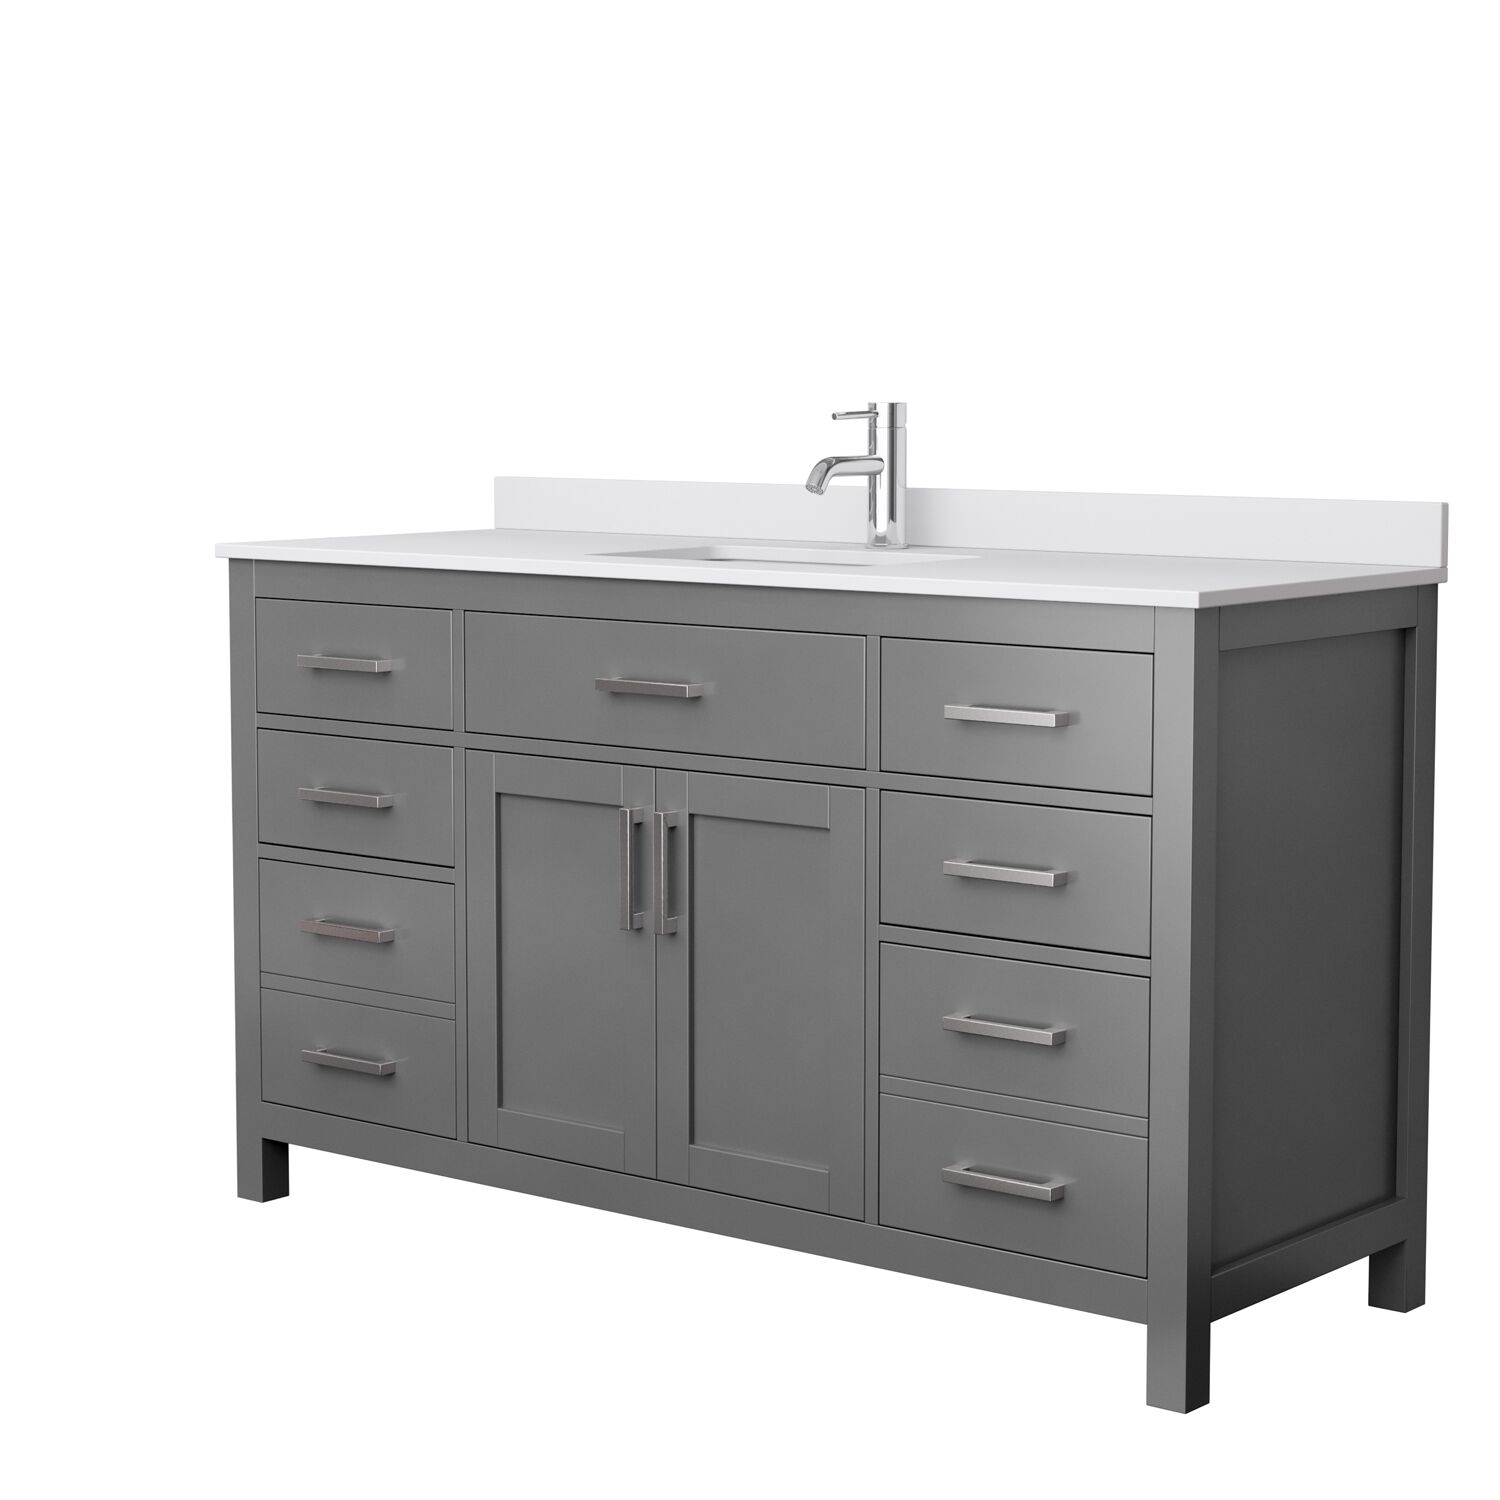 60" Single Bathroom Vanity in Dark Gray, White Cultured Marble Countertop, Undermount Square Sink, No Mirror